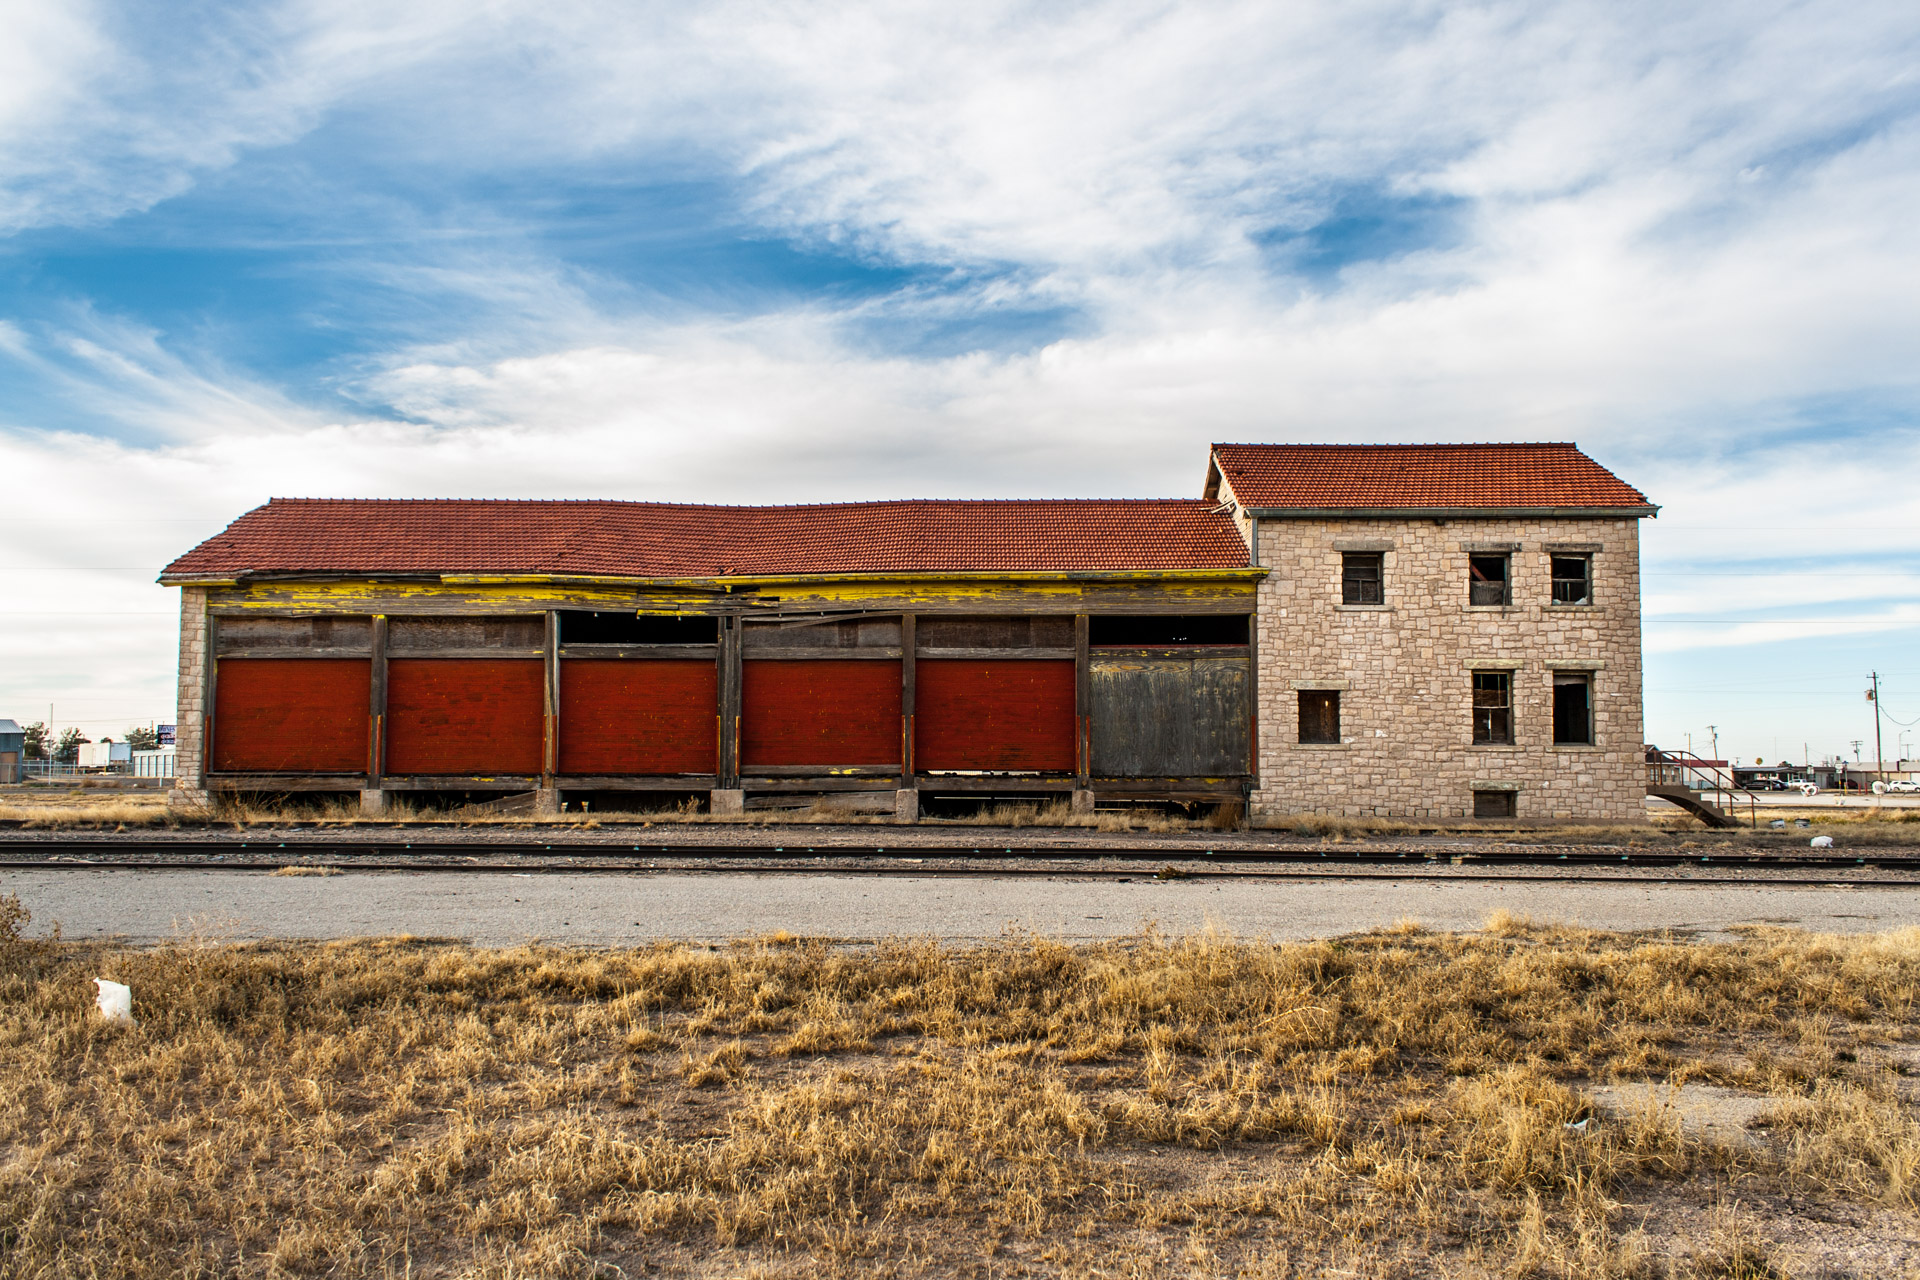 Fort Stockton, Texas - A Colorful Train Depot (back far)